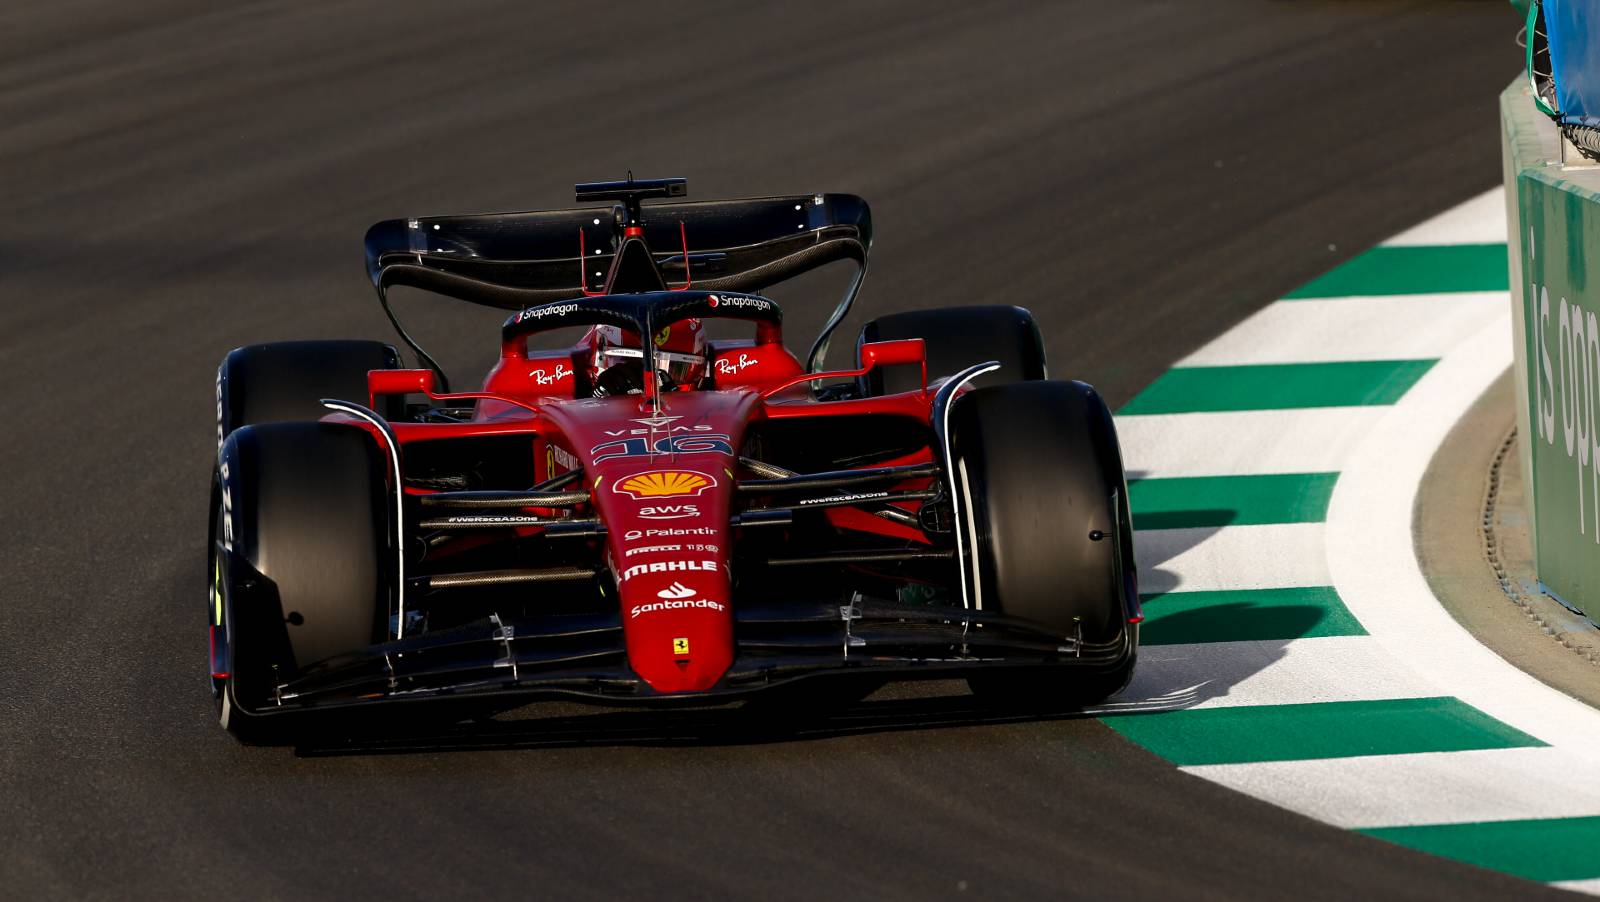 Charles Leclerc's Ferrari during free practice for the Saudi Arabian GP. Jeddah March 2022.